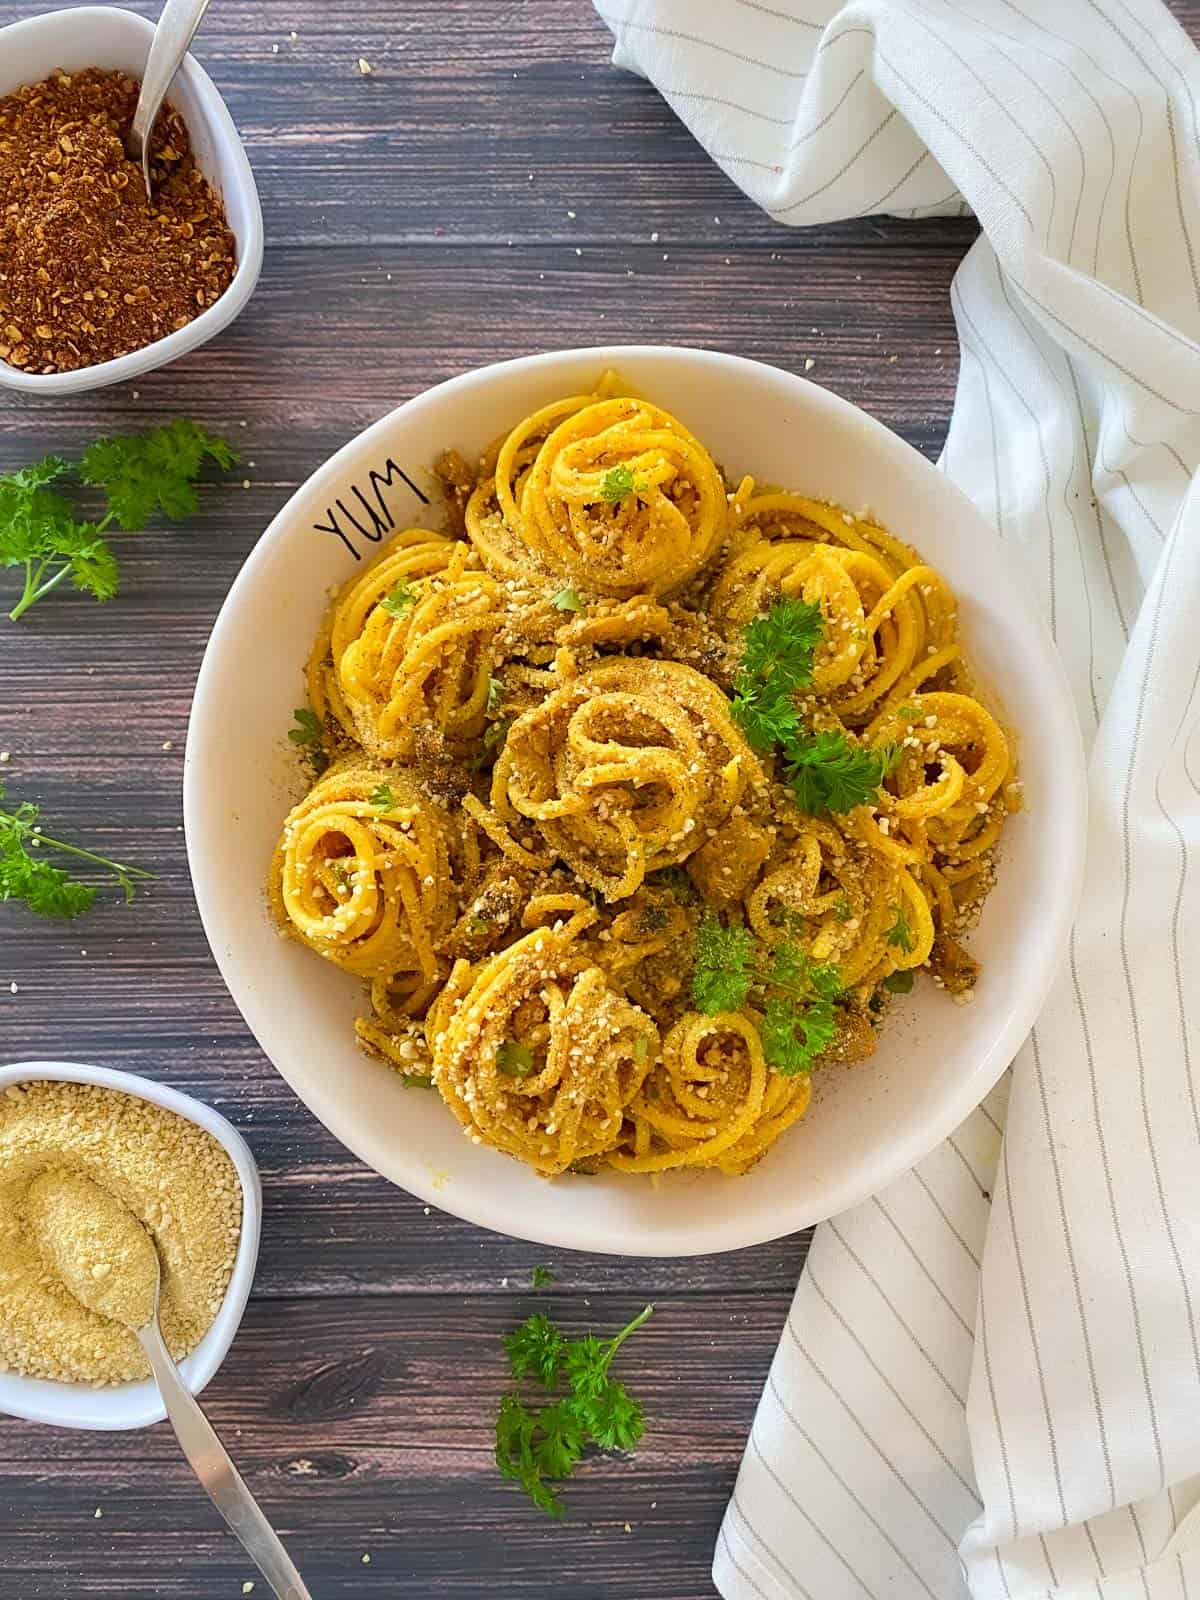 Vegan carbonara spaghetti in white bowl with parsley garnish.